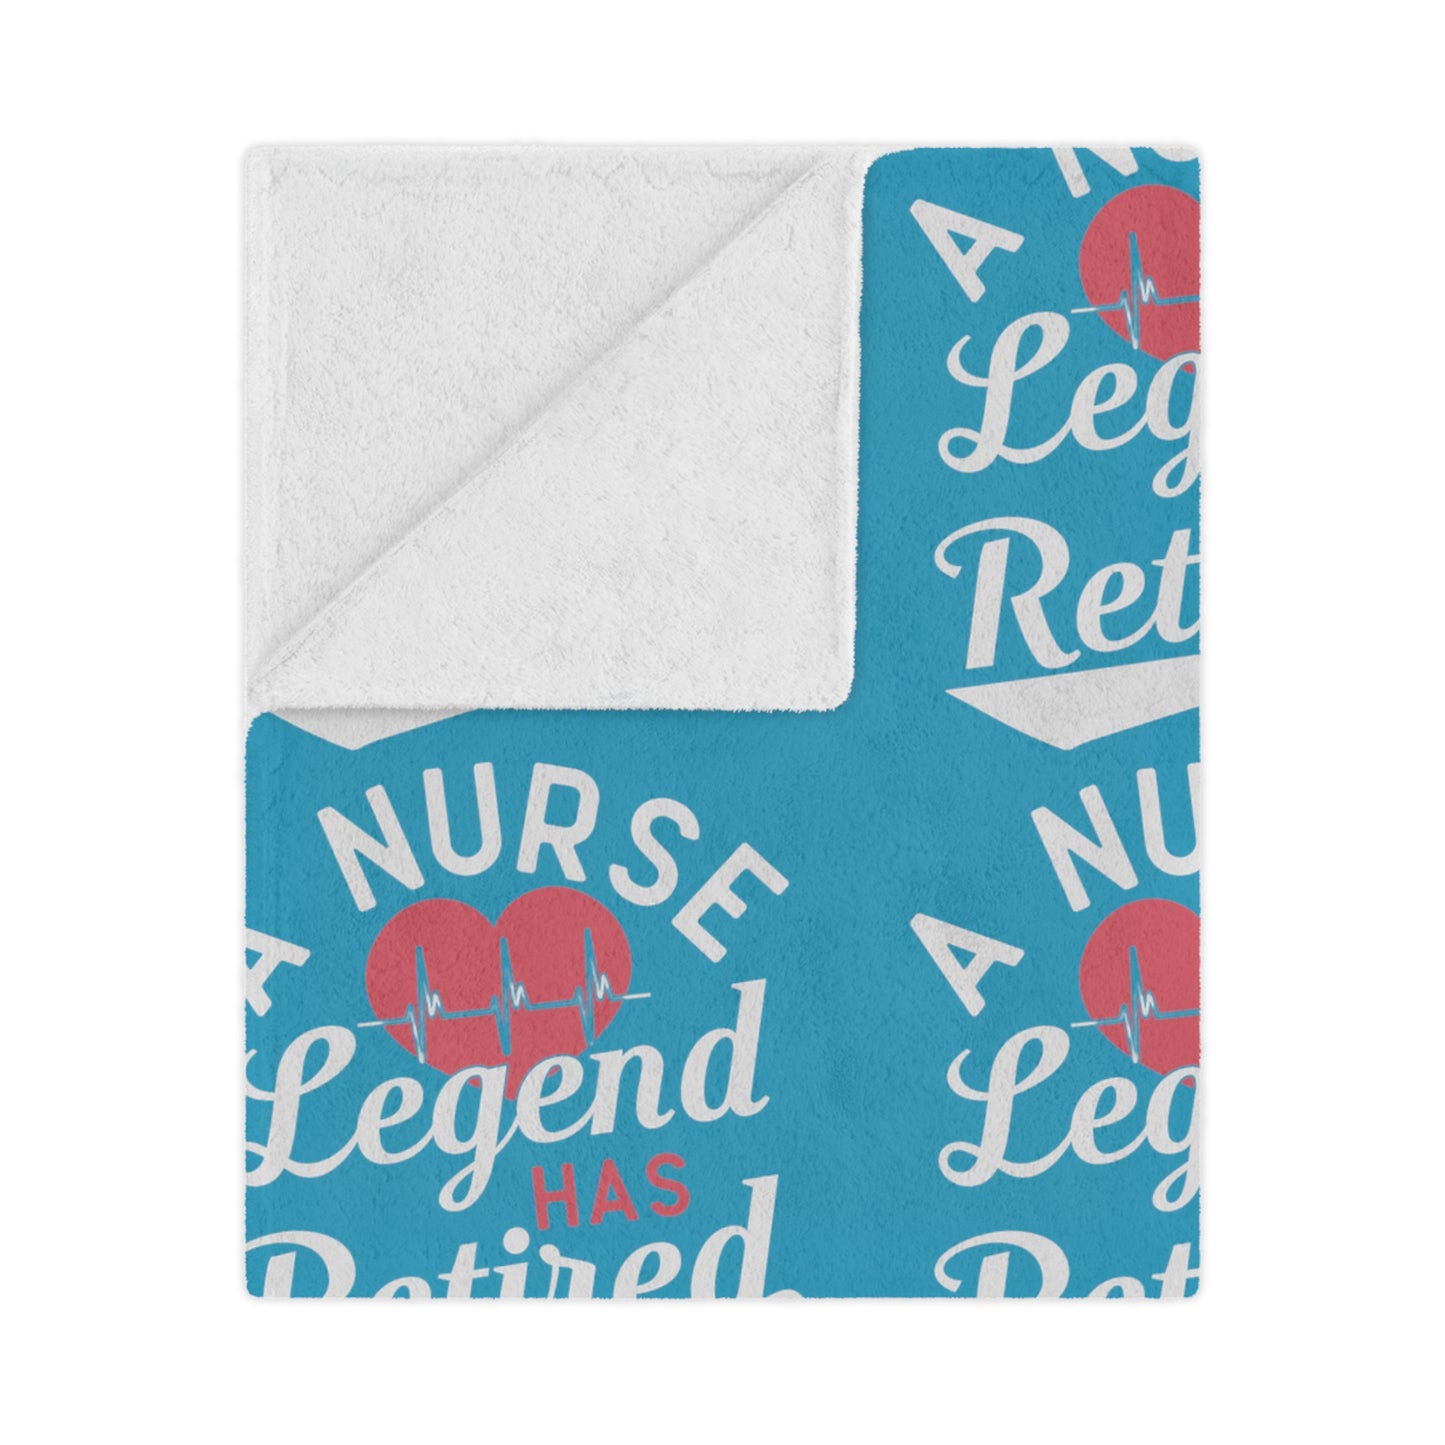 Retired Nurse Blanket, Retired Nurse Gifts, Gifts for Retired Nurse, Nurse Appreciation, Nurse Blanket, Nurse Gift